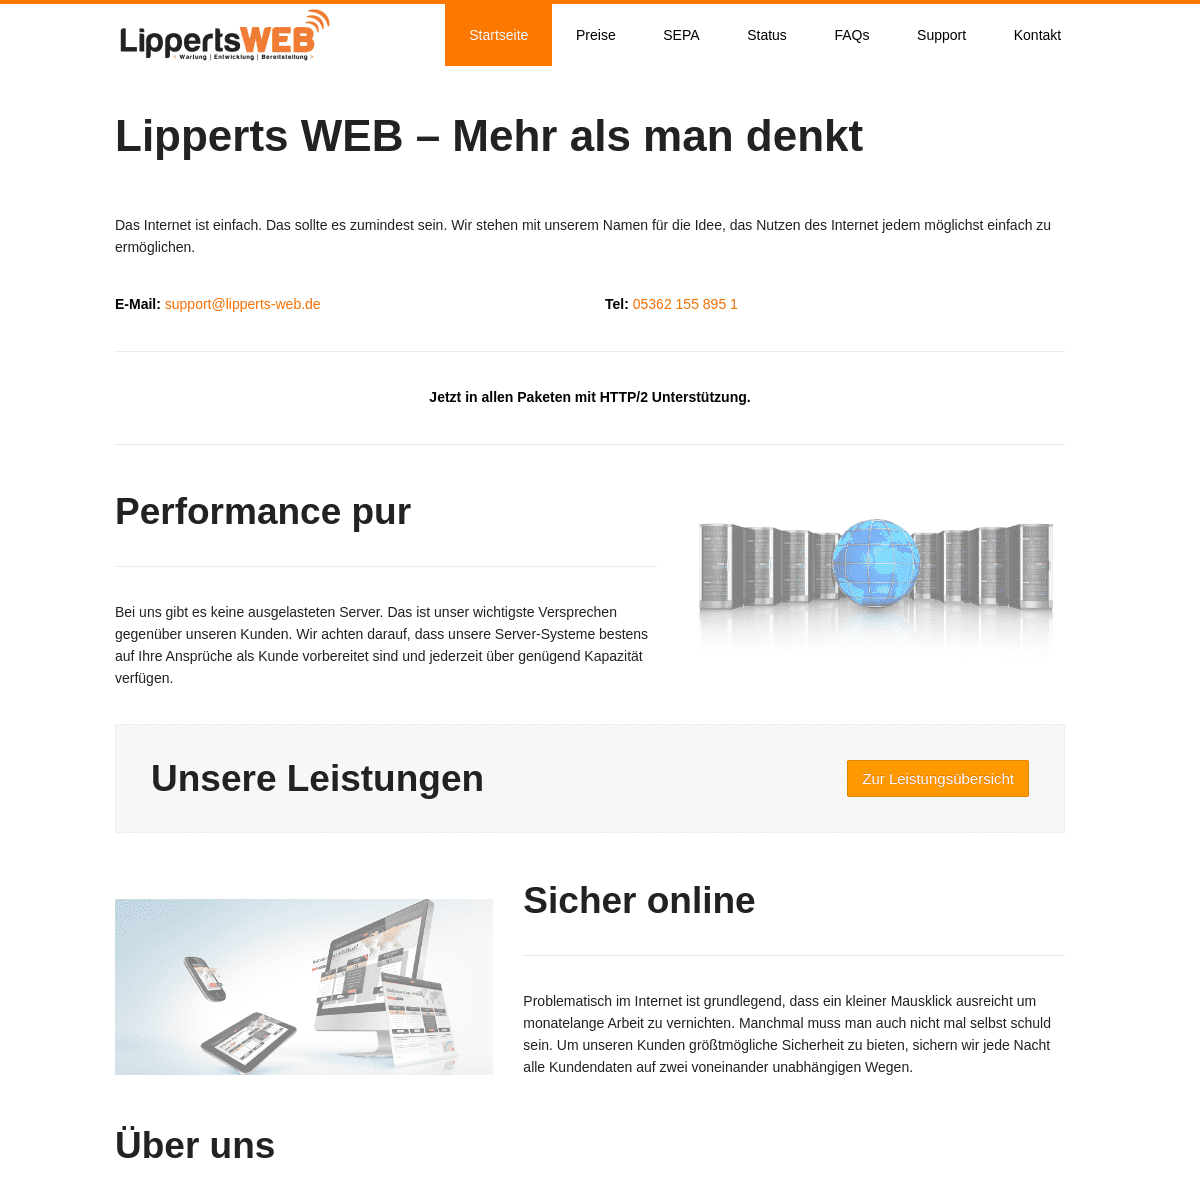 A complete backup of https://lipperts-web.de